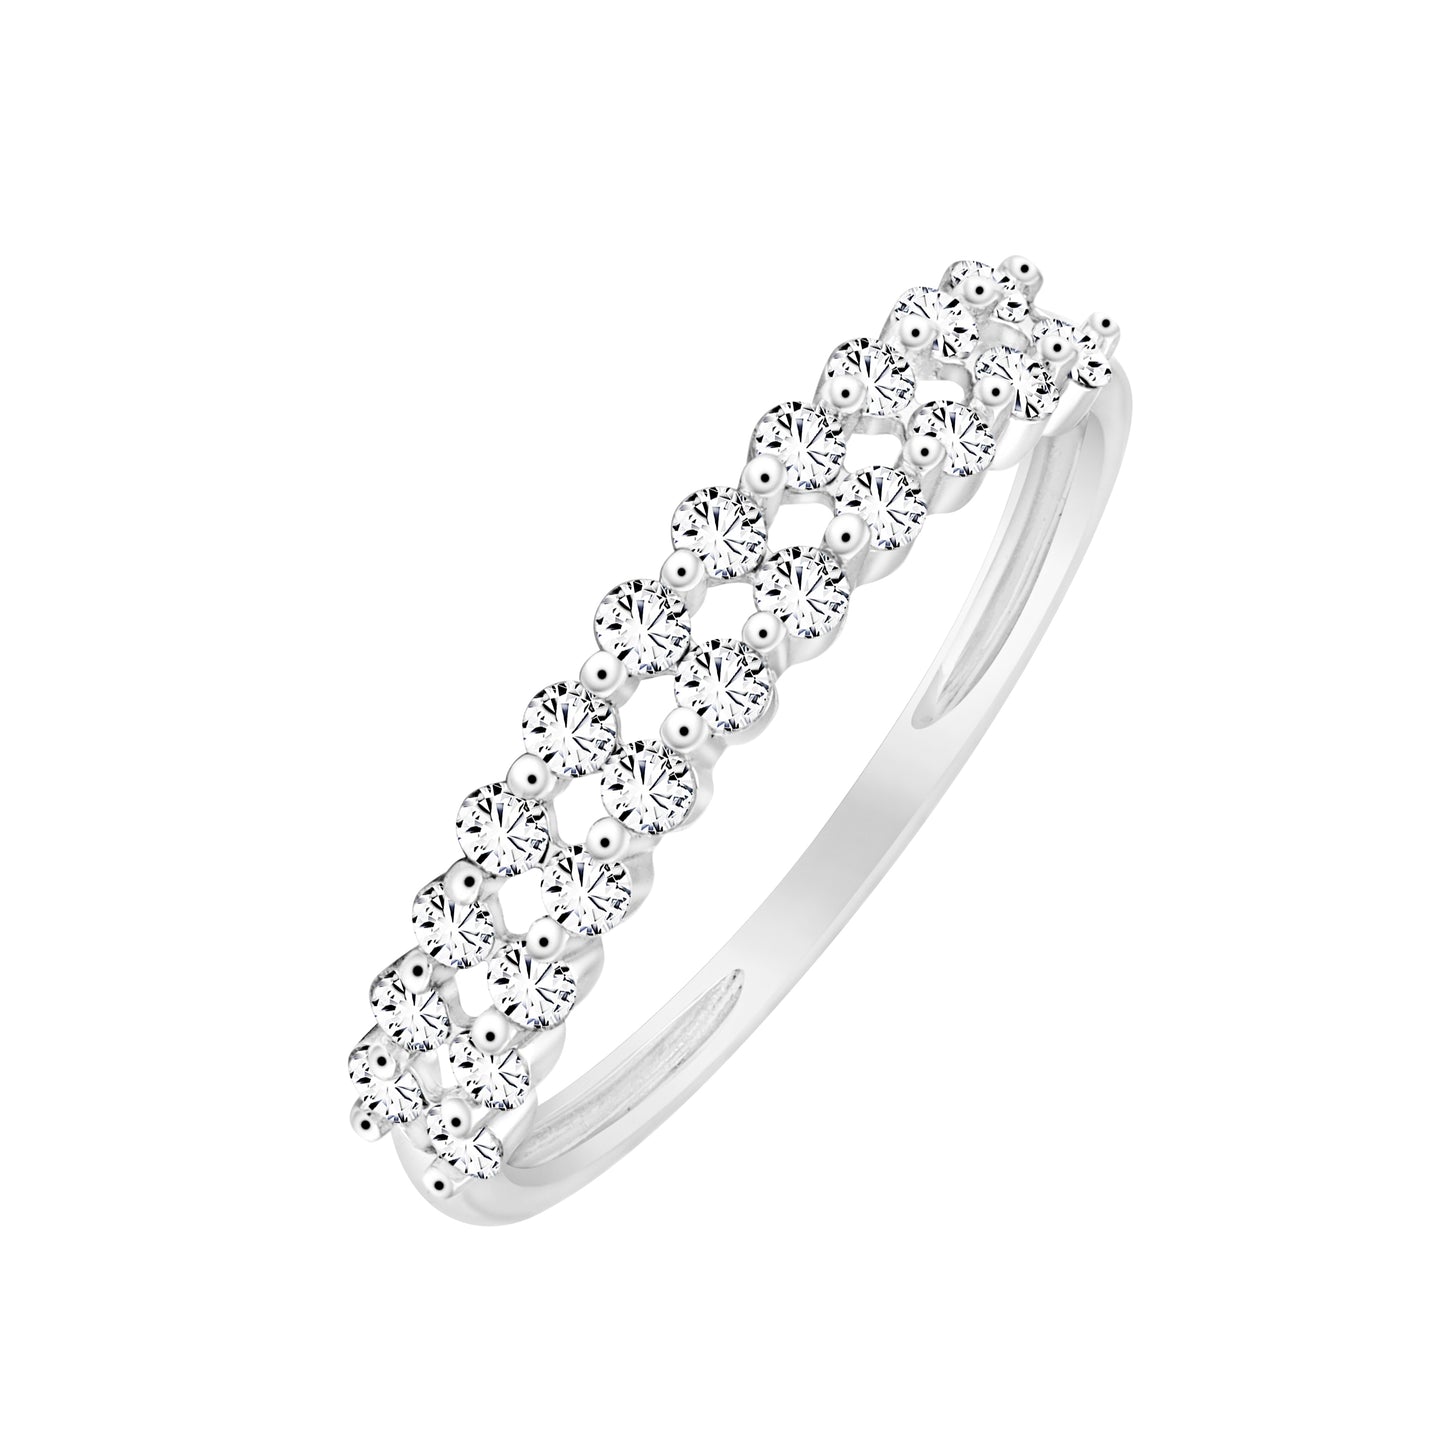 TAKA Jewellery Cresta Diamond Ring 18K